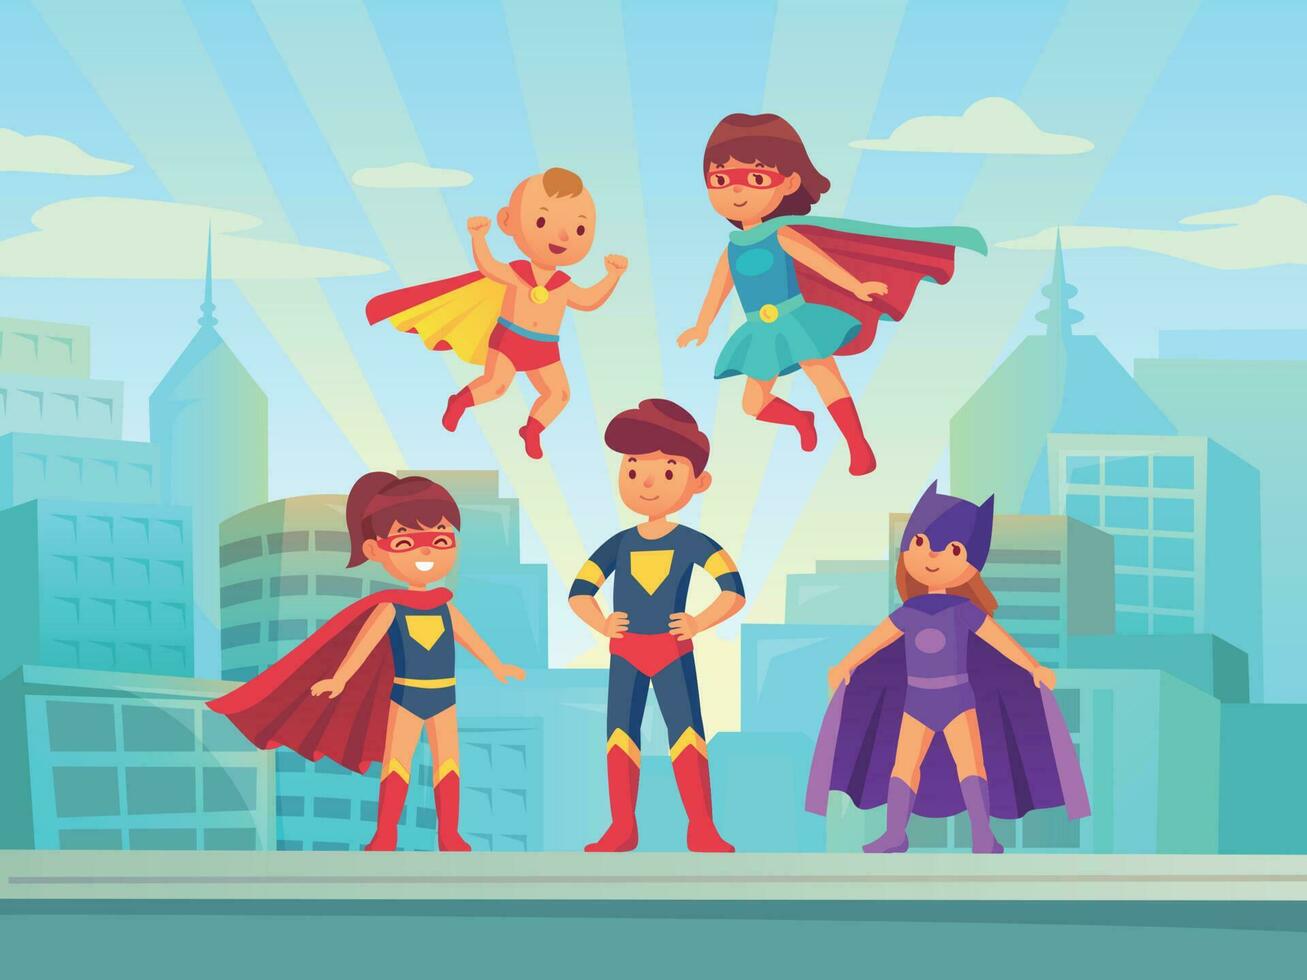 https://static.vecteezy.com/system/resources/previews/023/955/391/non_2x/superhero-kids-team-comic-hero-kid-in-super-costume-with-cloak-on-urban-roof-children-superheroes-cartoon-illustration-vector.jpg